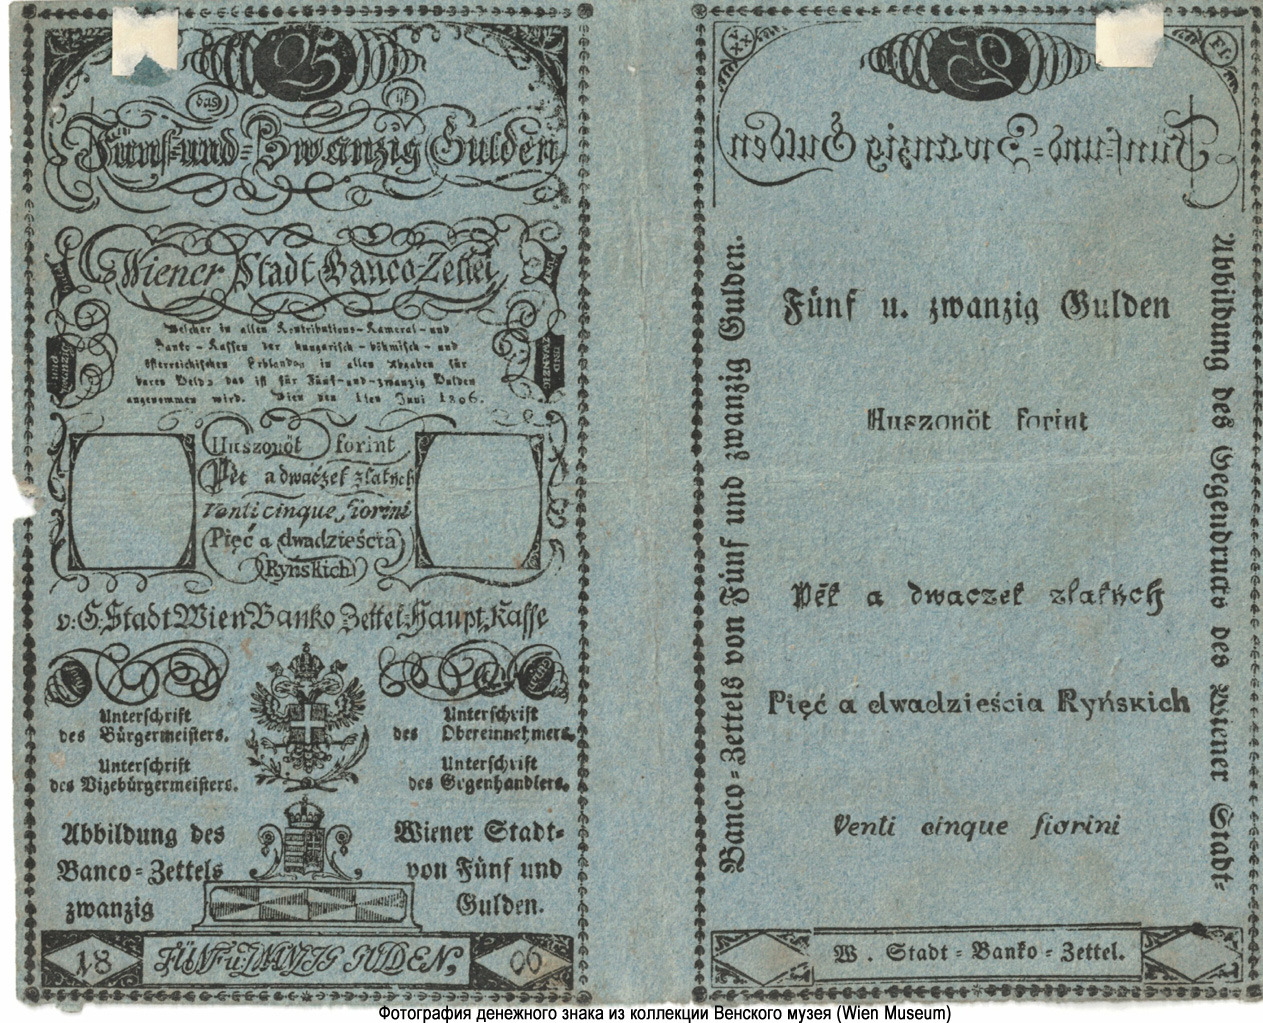 Wiener-Stadt-Banco-Zettel. 25 Gulden 1806.